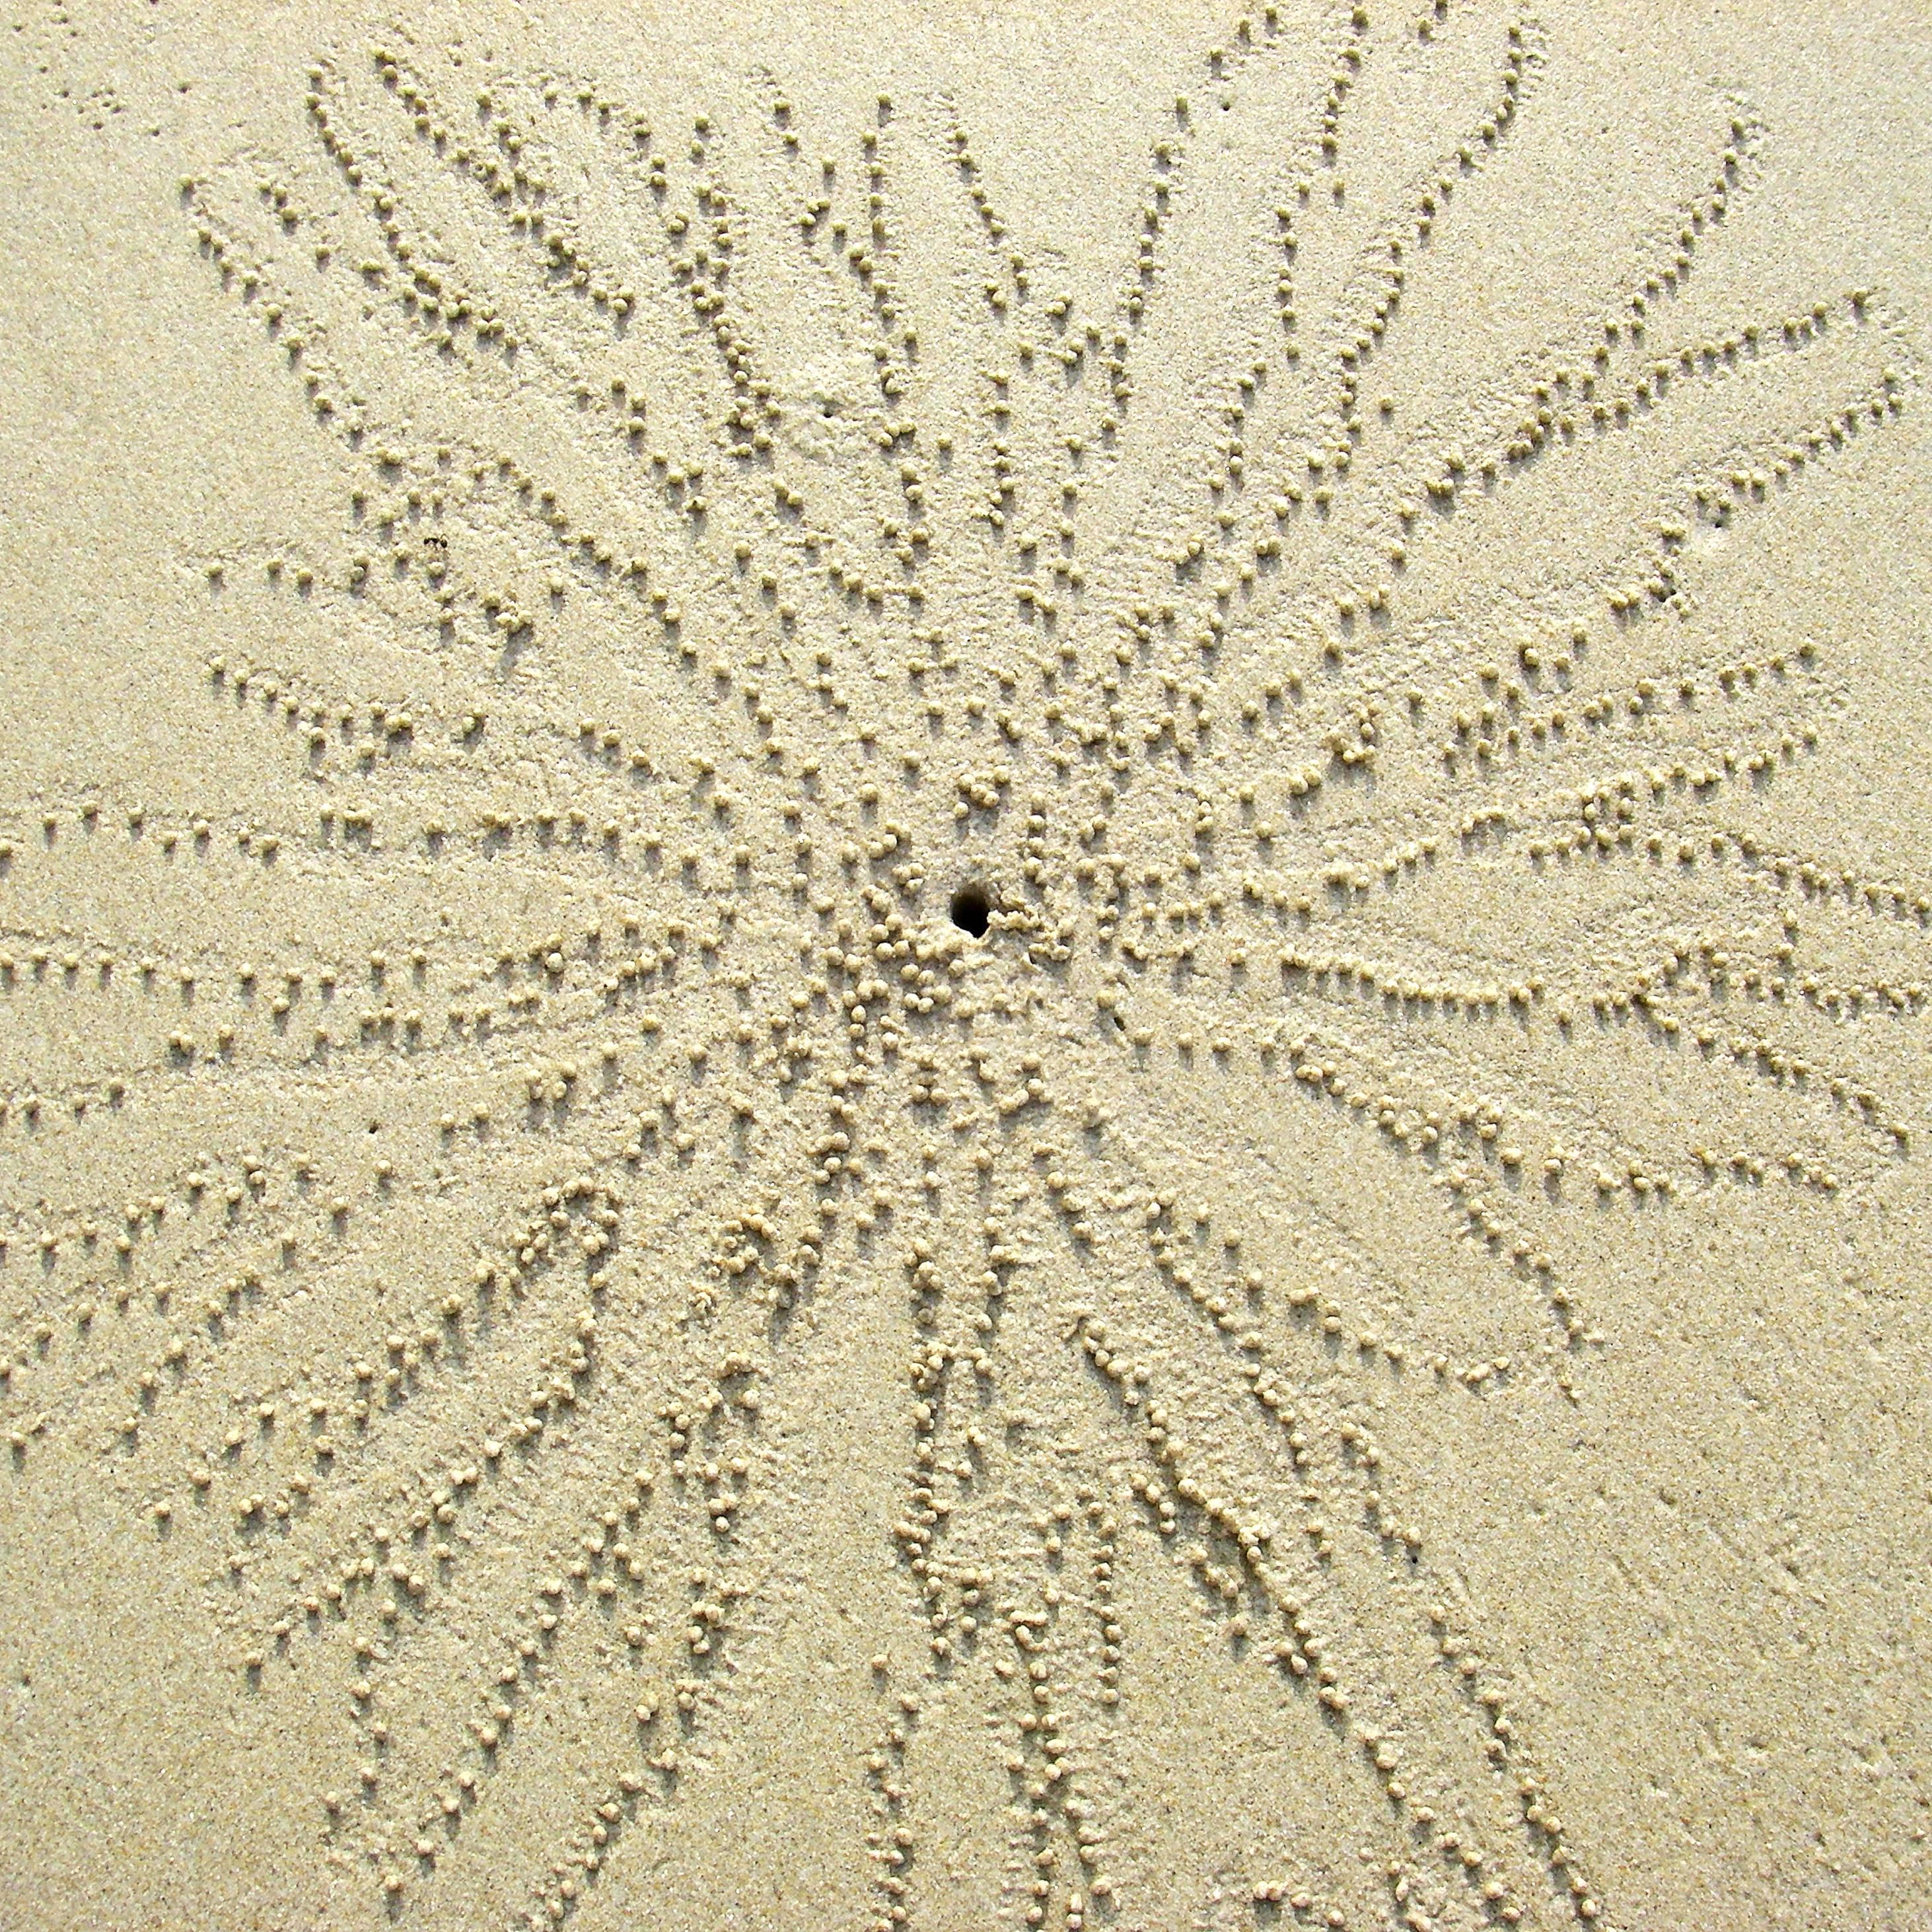 Linda Epstein Abstract Photograph - Radiating Sand Pattern 1